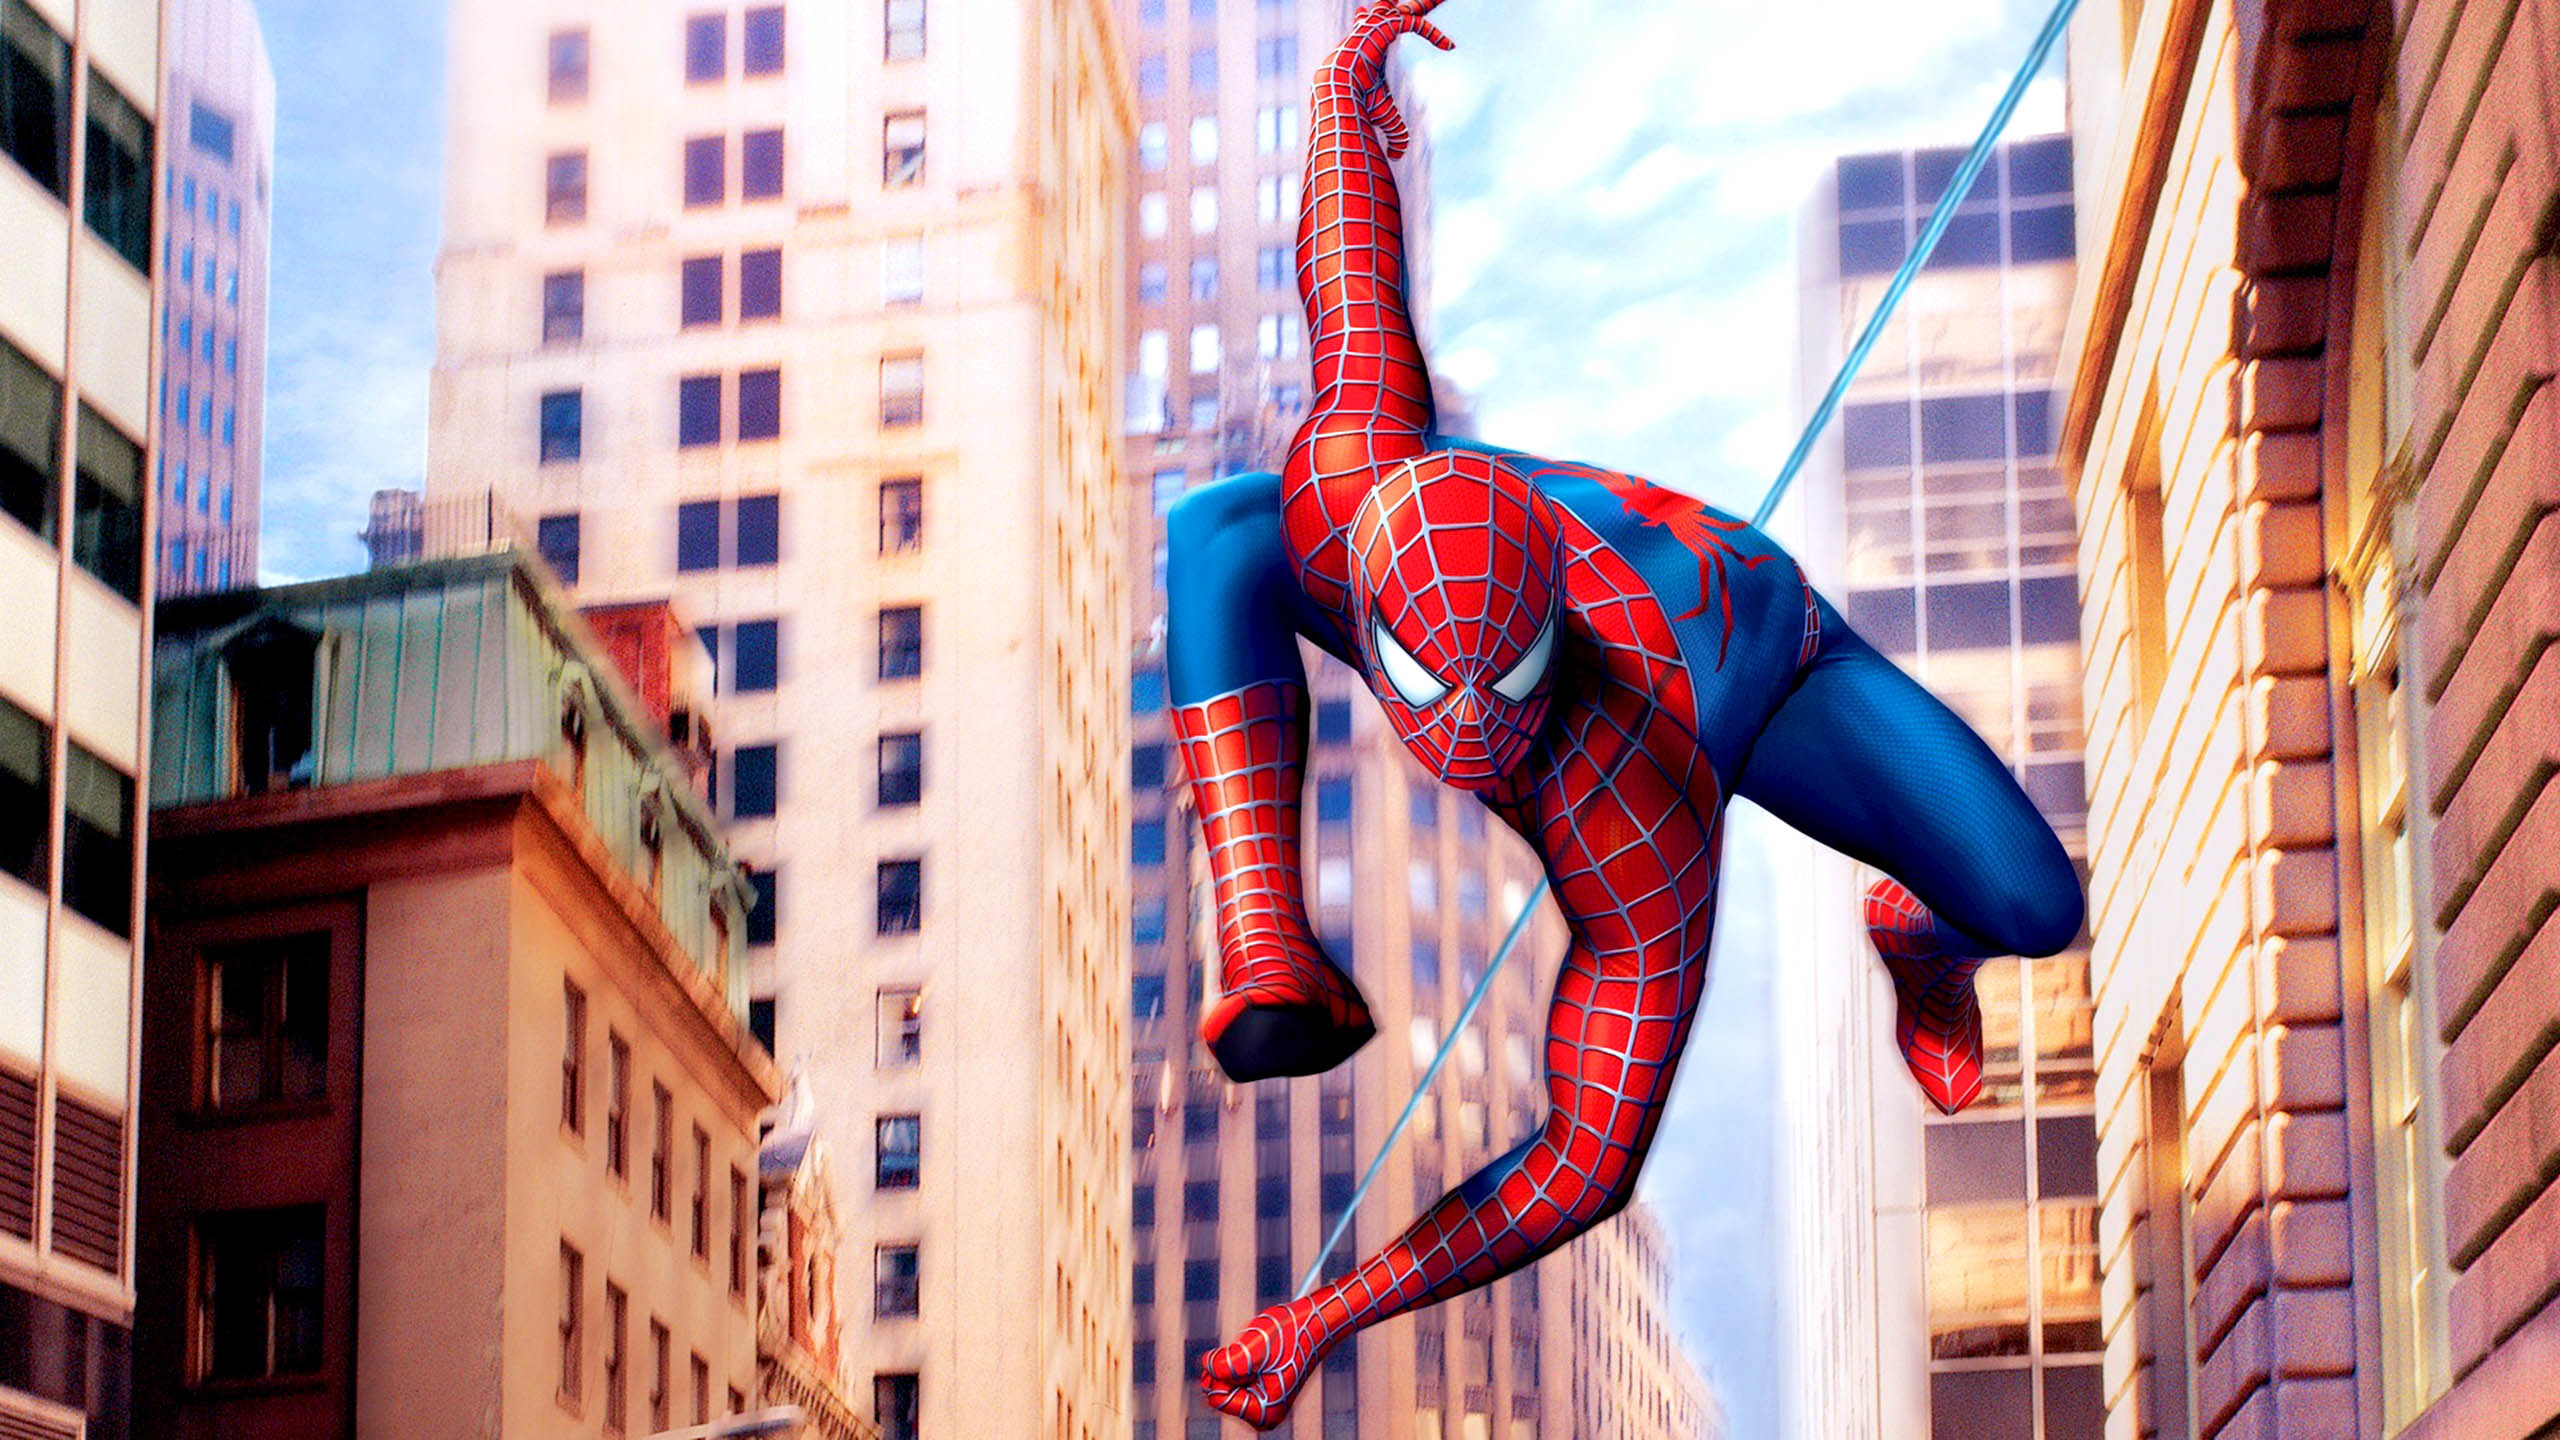 2560x1440 Image detail for -Superhero Spiderman free movie wallpaper - resolution .